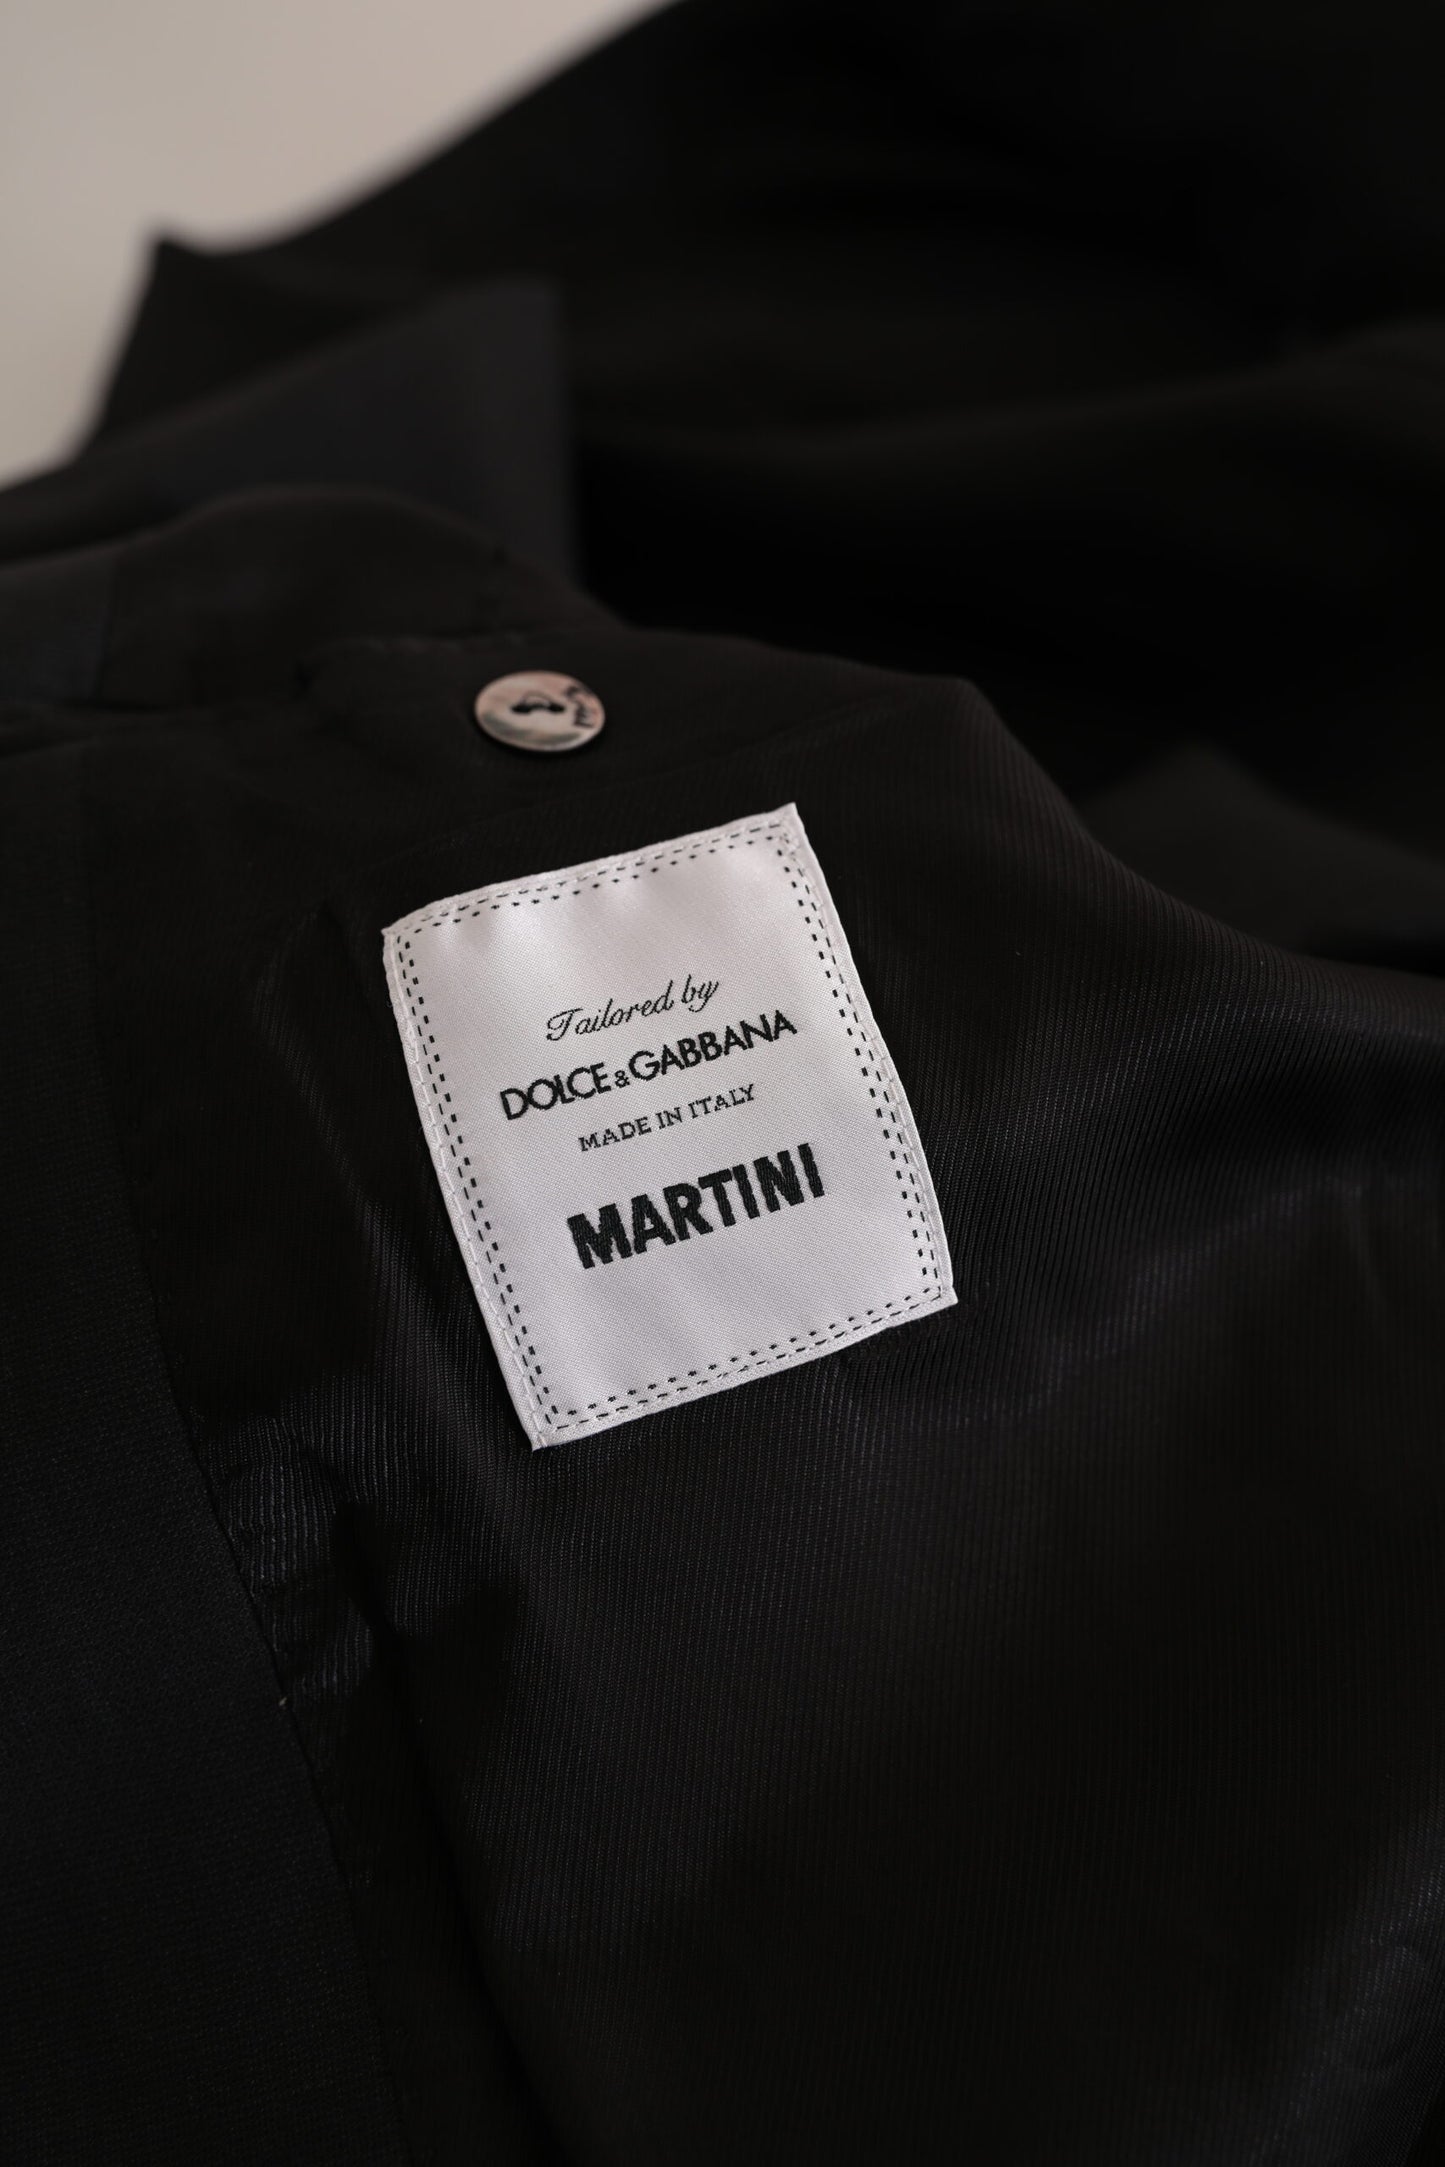 Dolce & Gabbana Elegant Black Virgin Wool Martini Suit